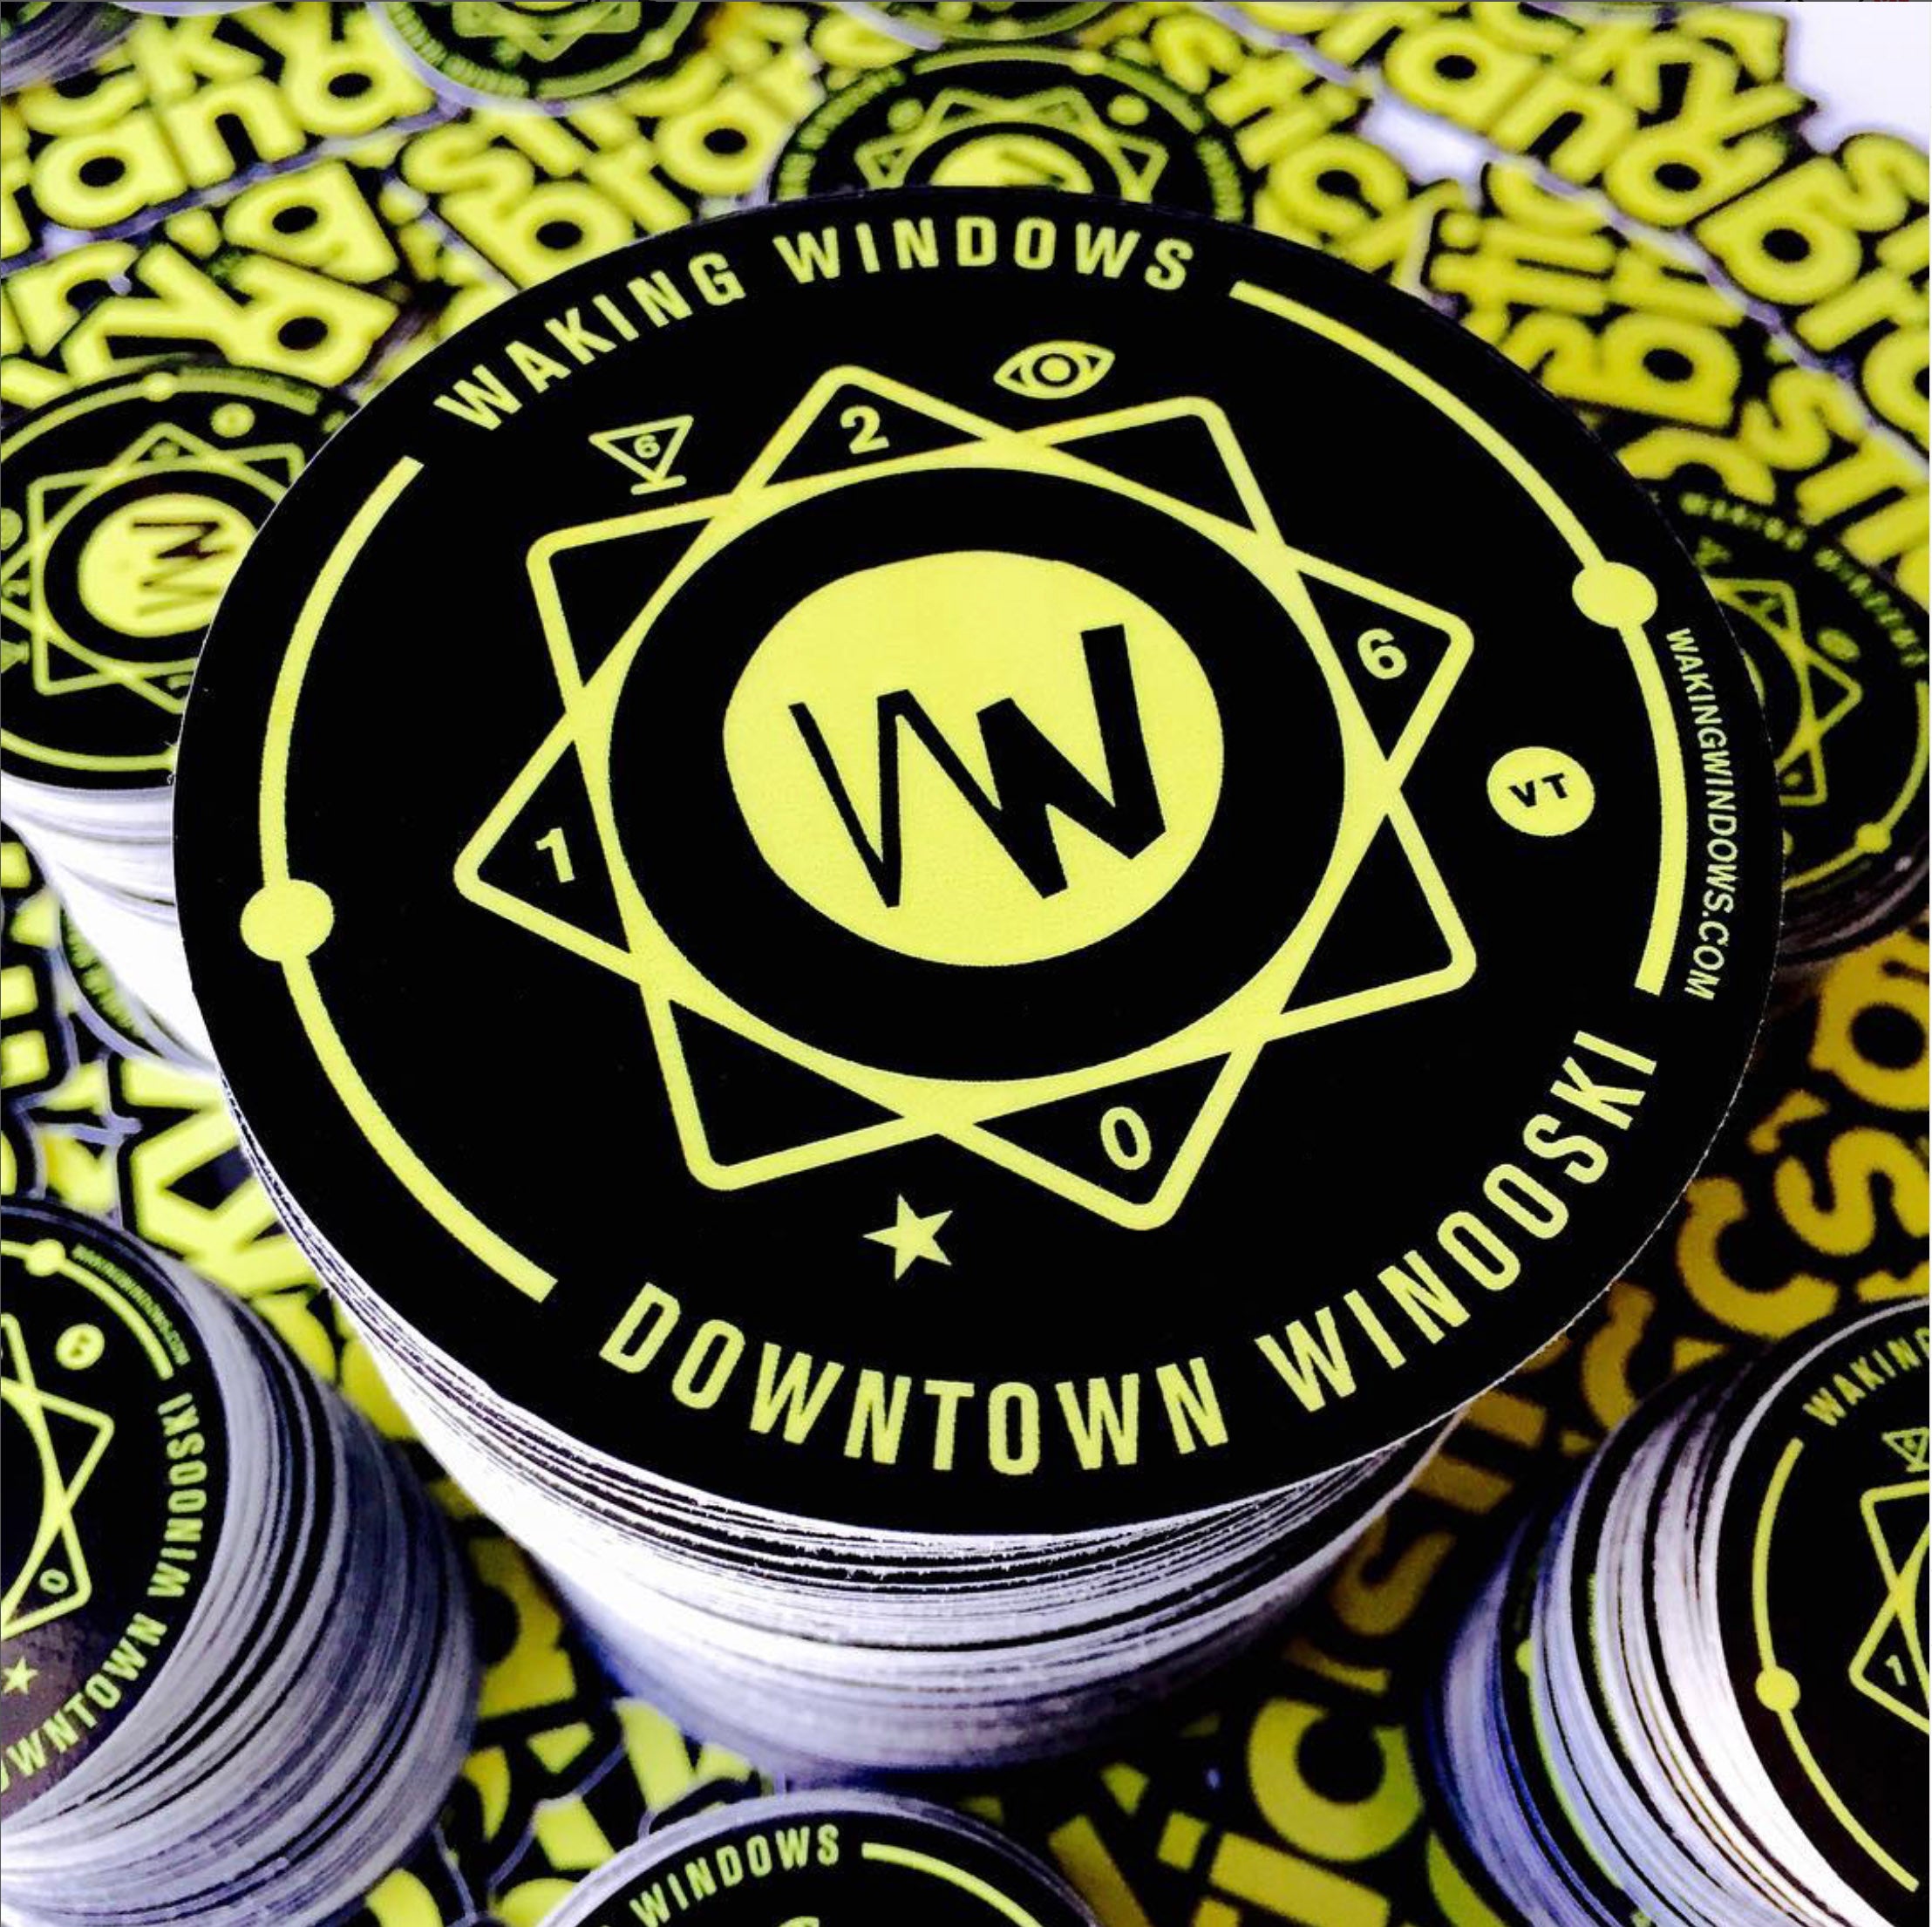 Waking Windows in Downtown Winooski custom band event sticker